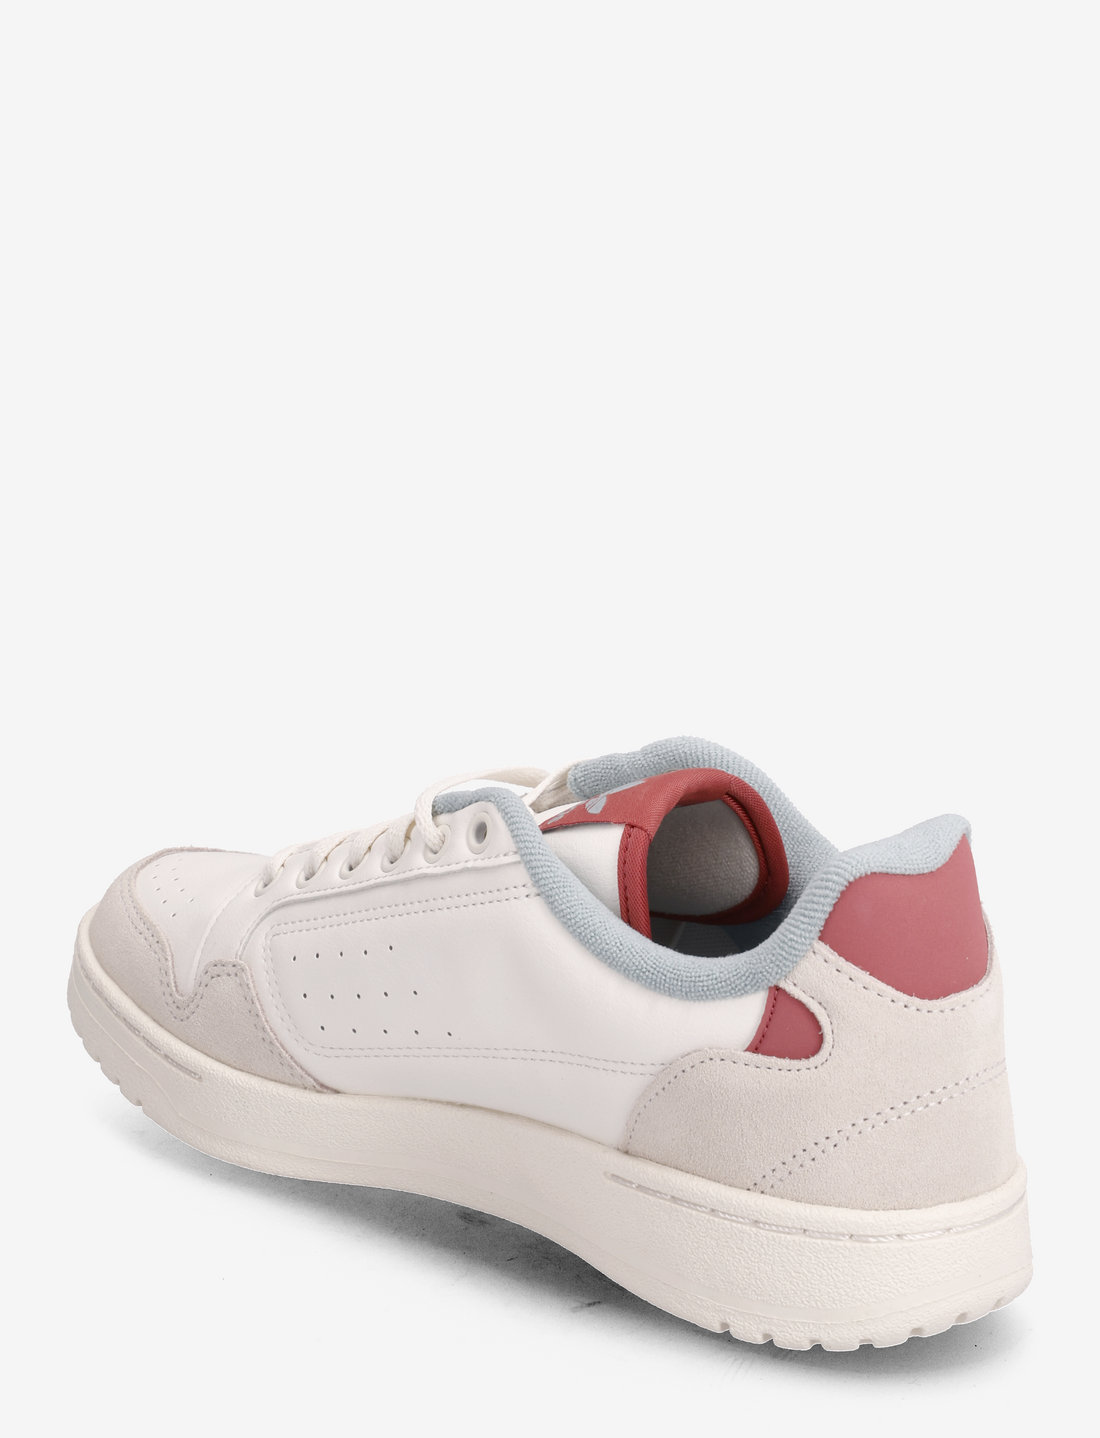 adidas Originals Ny 90 W - Sneaker - Booztlet.com Österreich